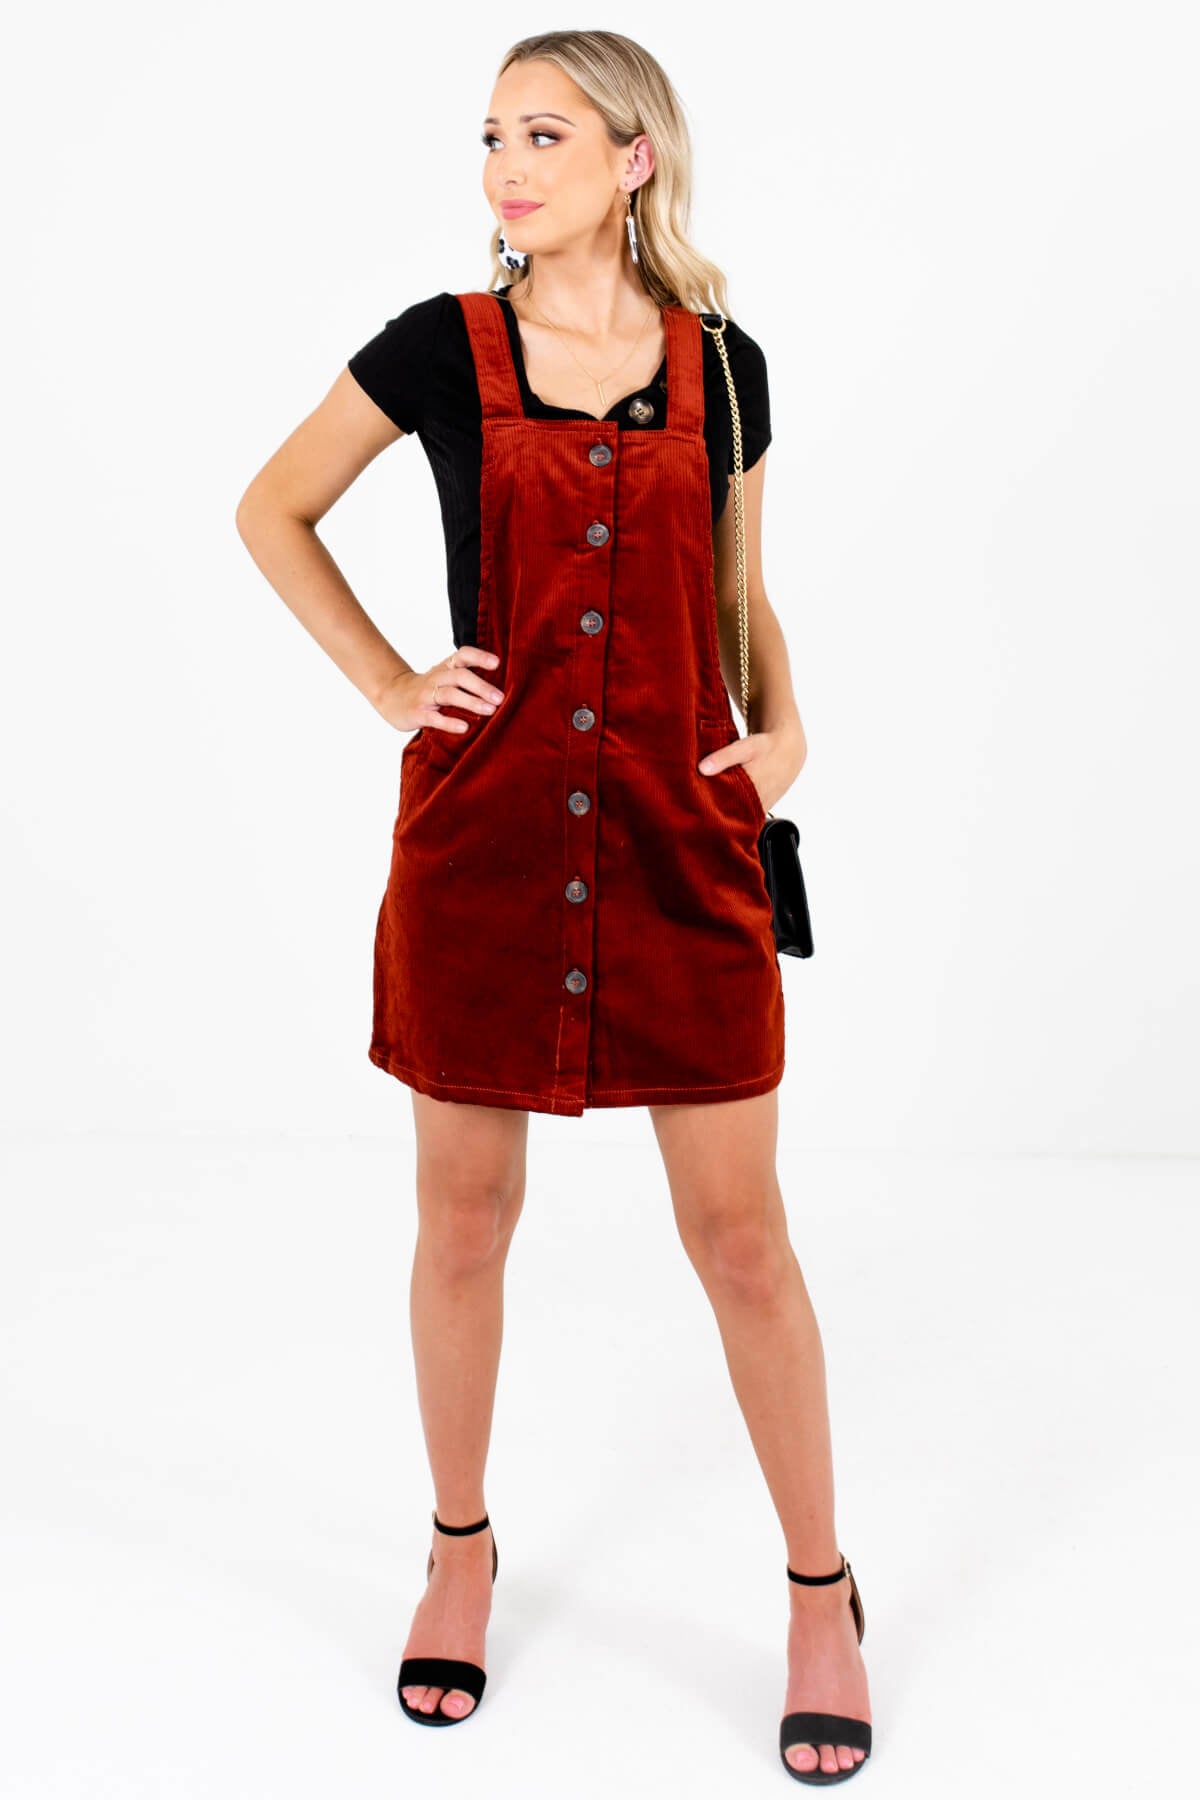 Women's Rust Red High-Quality Lightweight Material Boutique Mini Dress